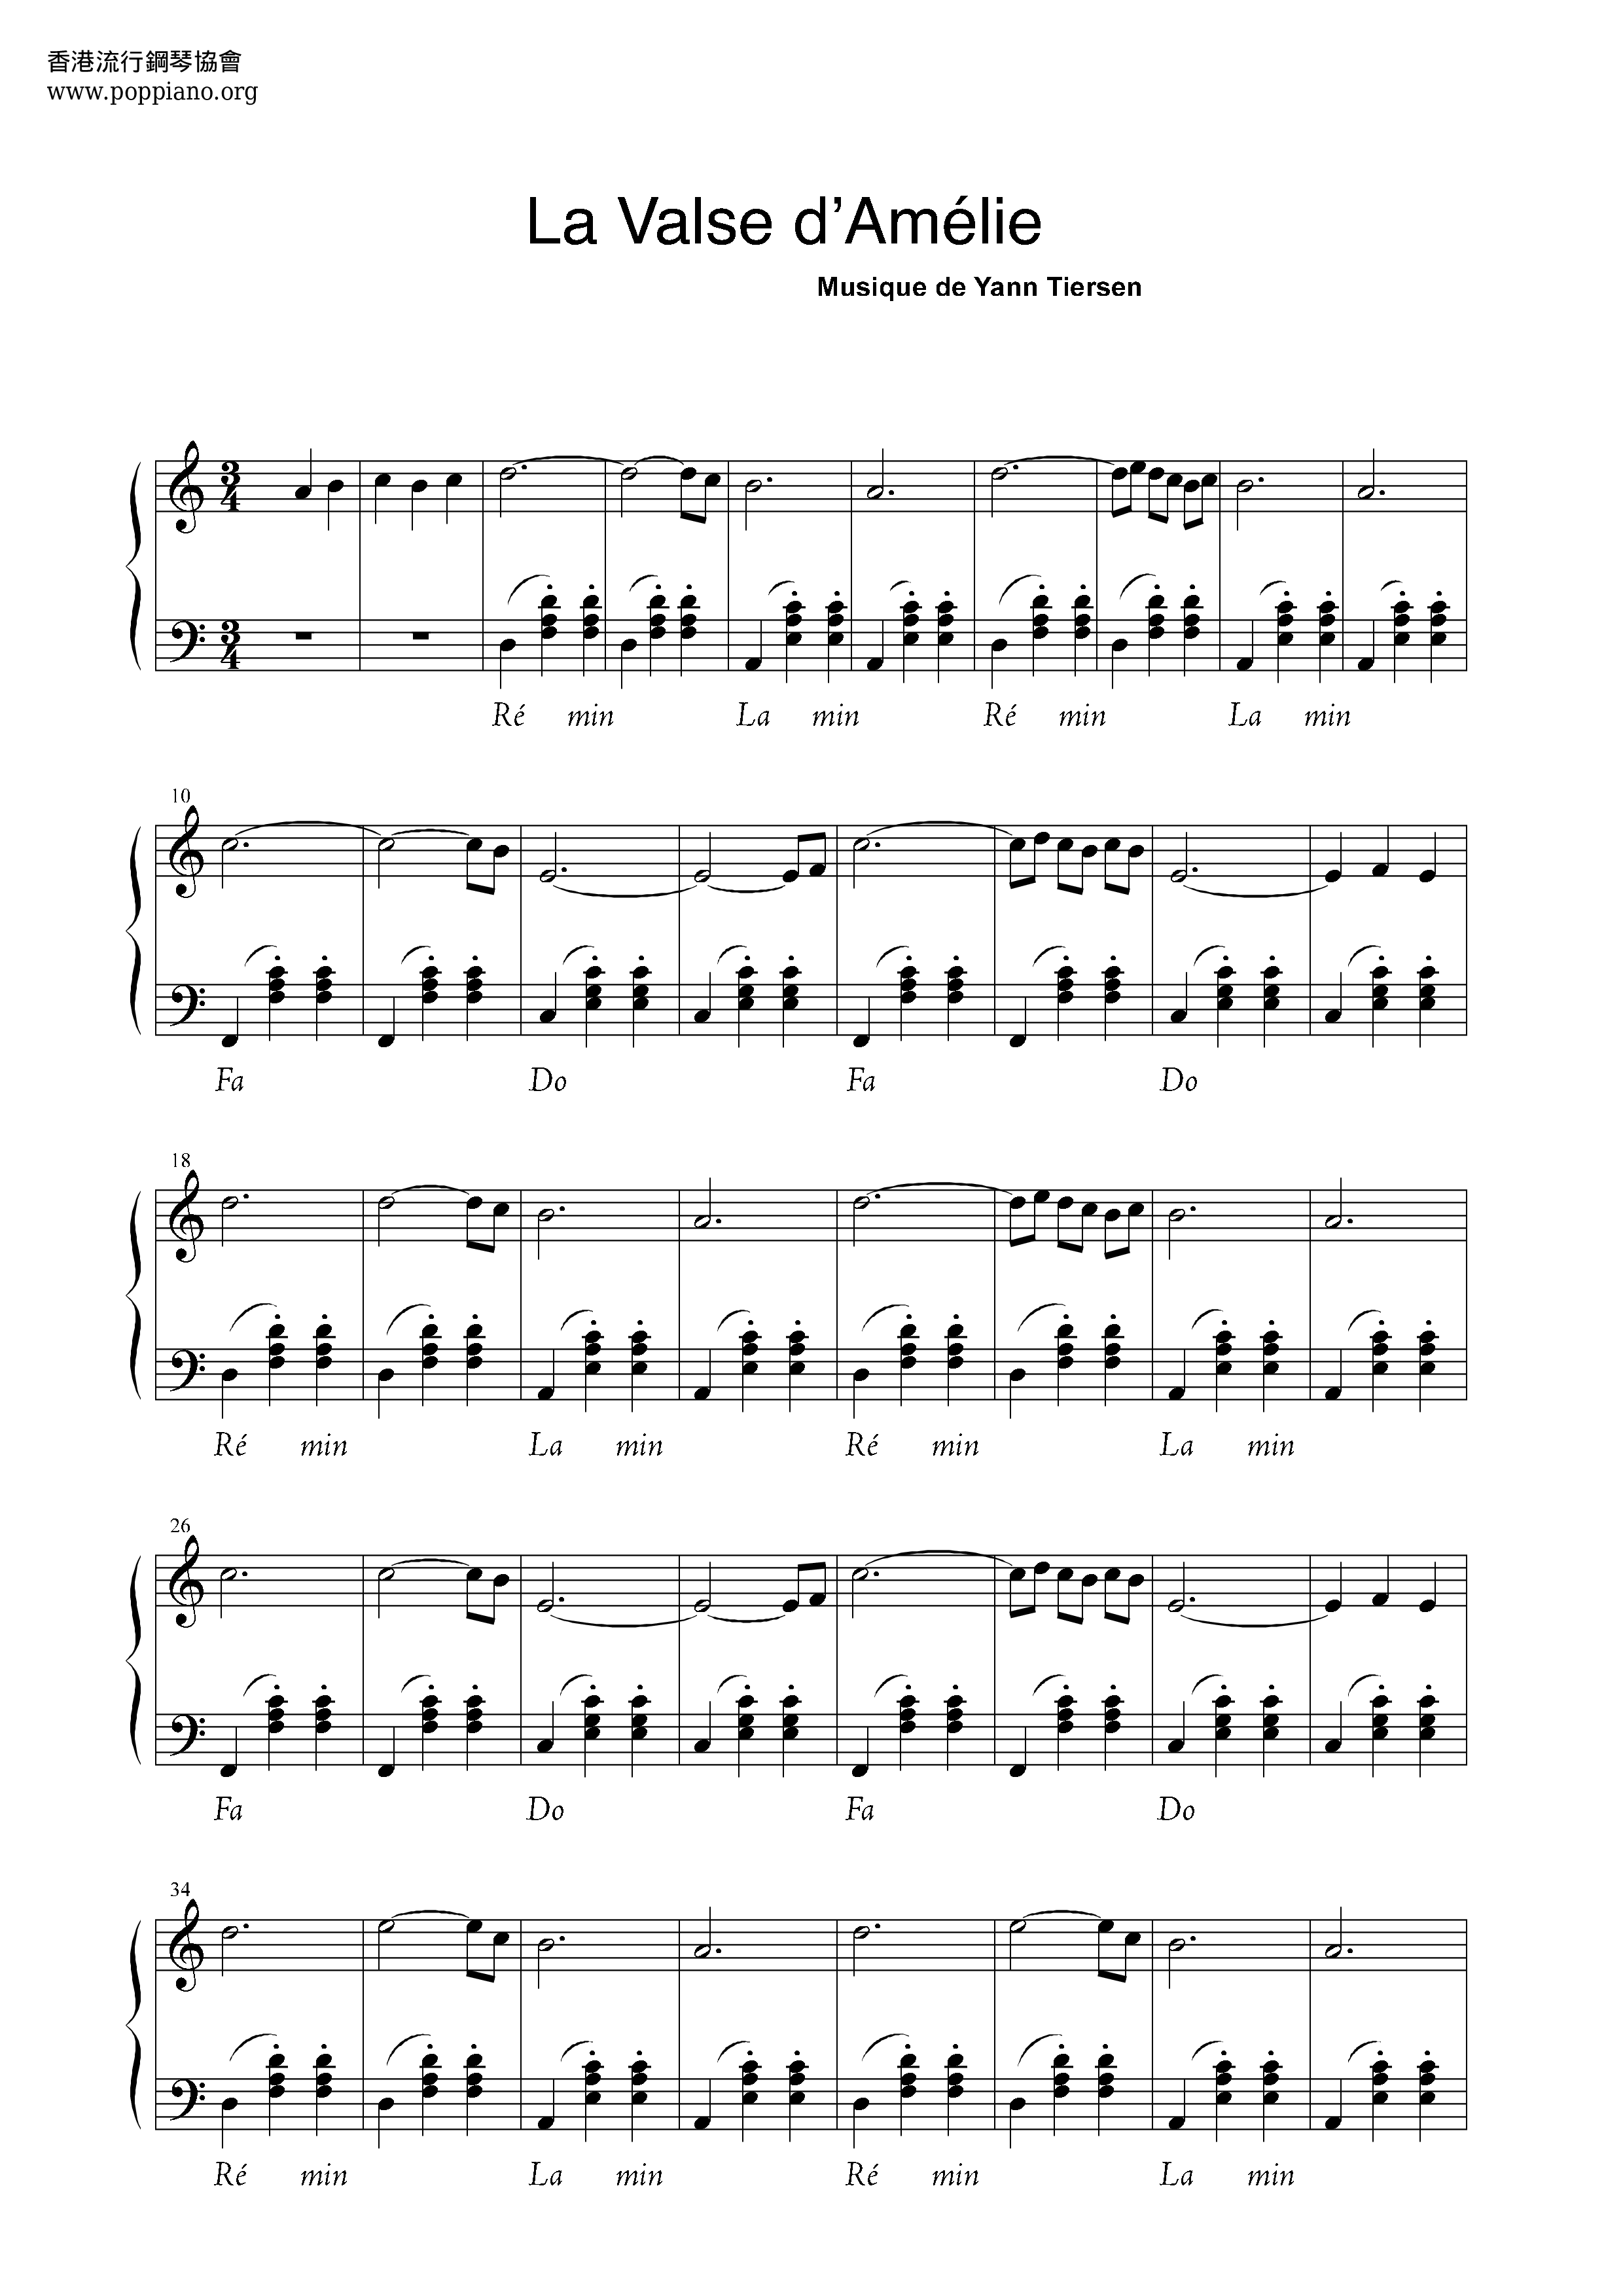 La Valse D'amelieピアノ譜